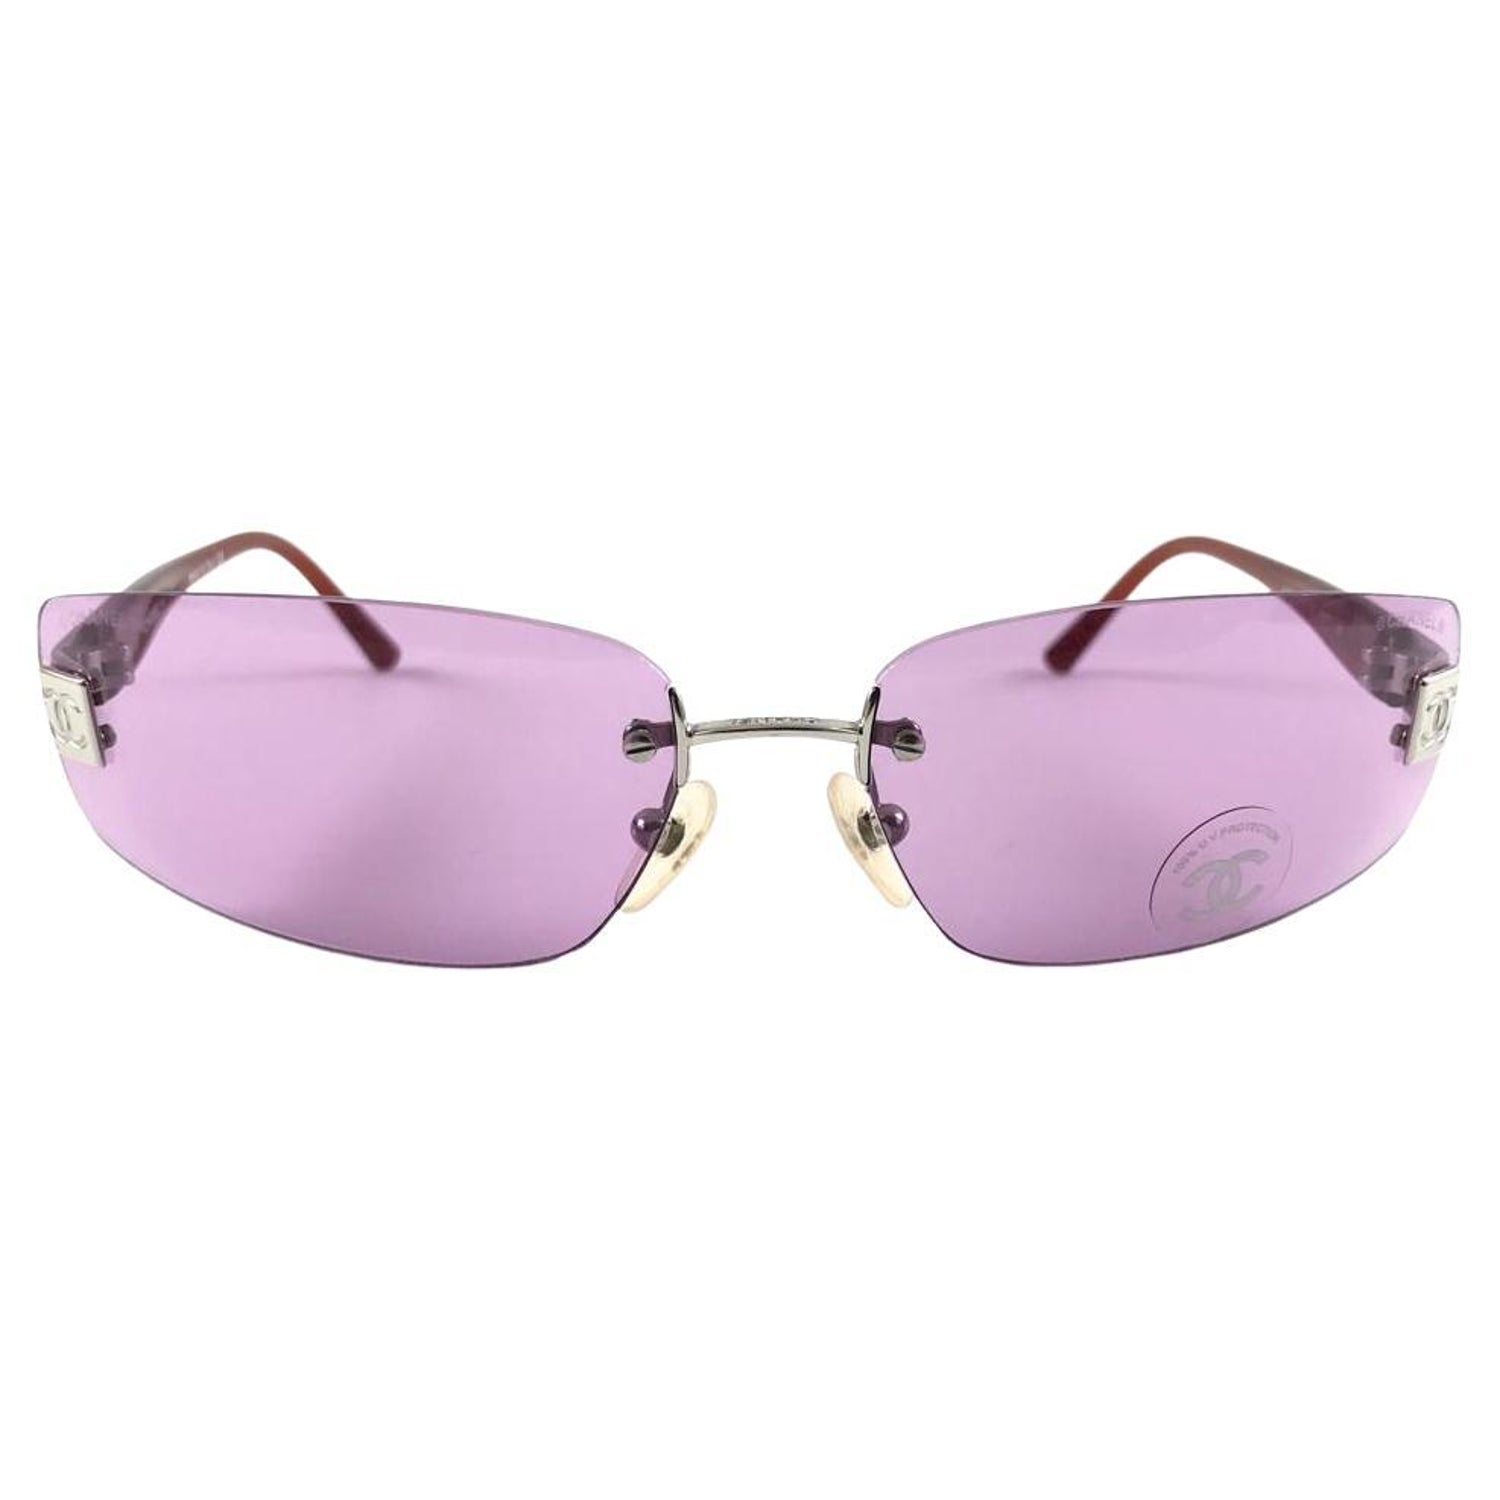 Vintage Chanel Rimless Sunglasses - 3 For Sale on 1stDibs